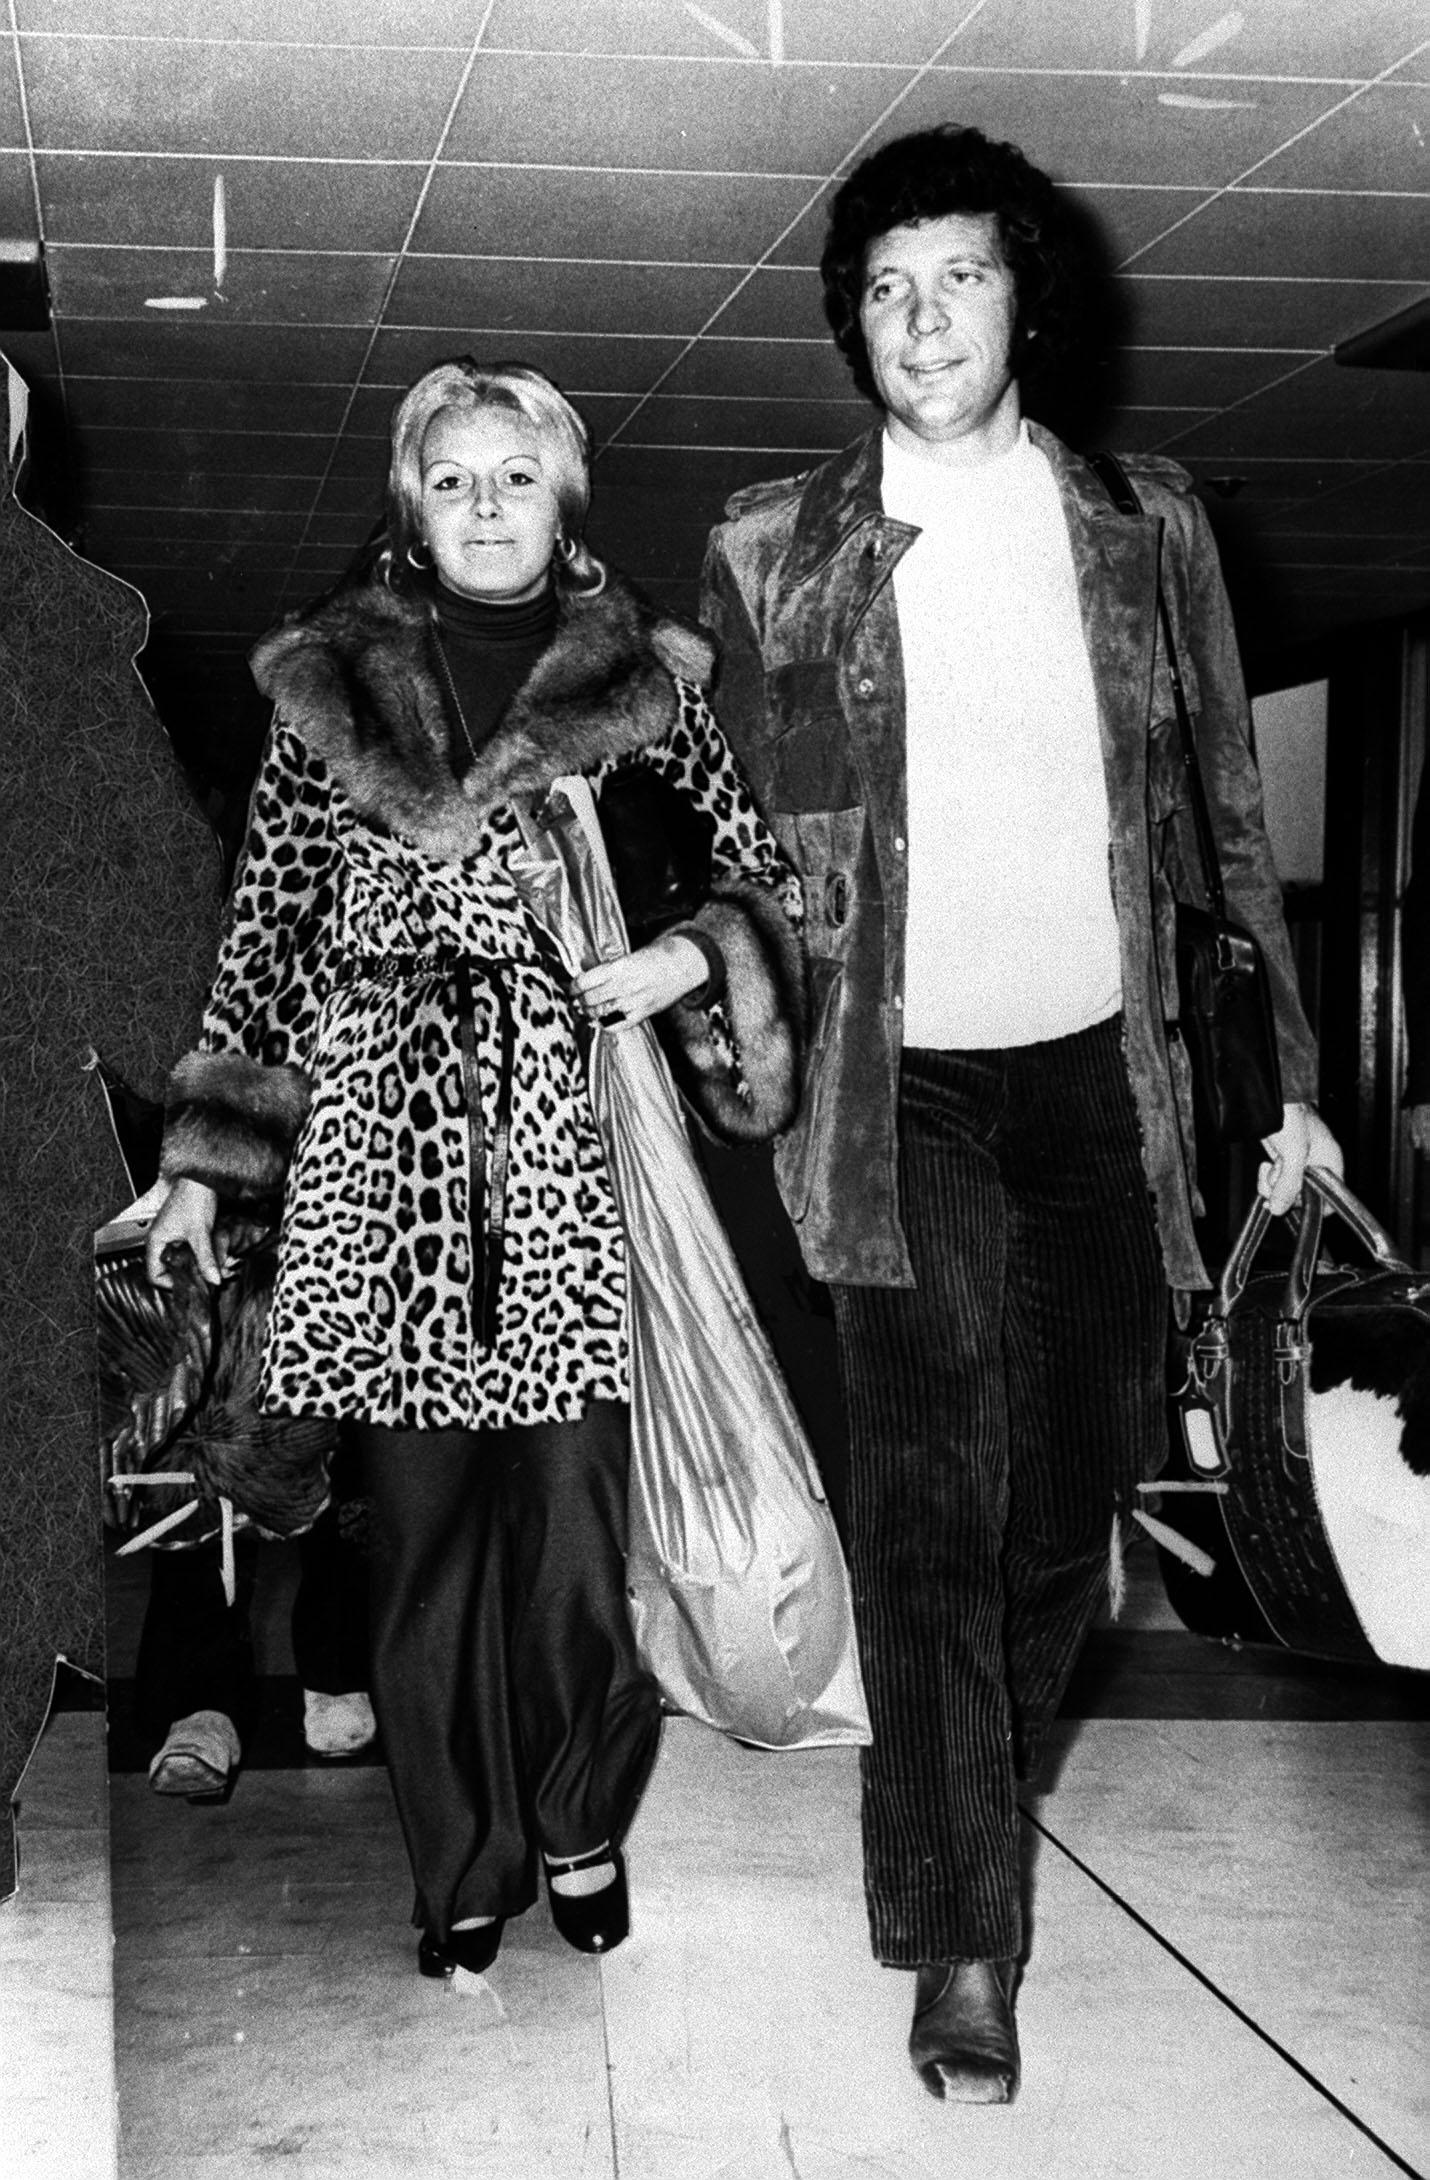 Tom Jones and his wife Melinda "Linda" Woodward in Los Angeles in 1970 | Source: Getty Images